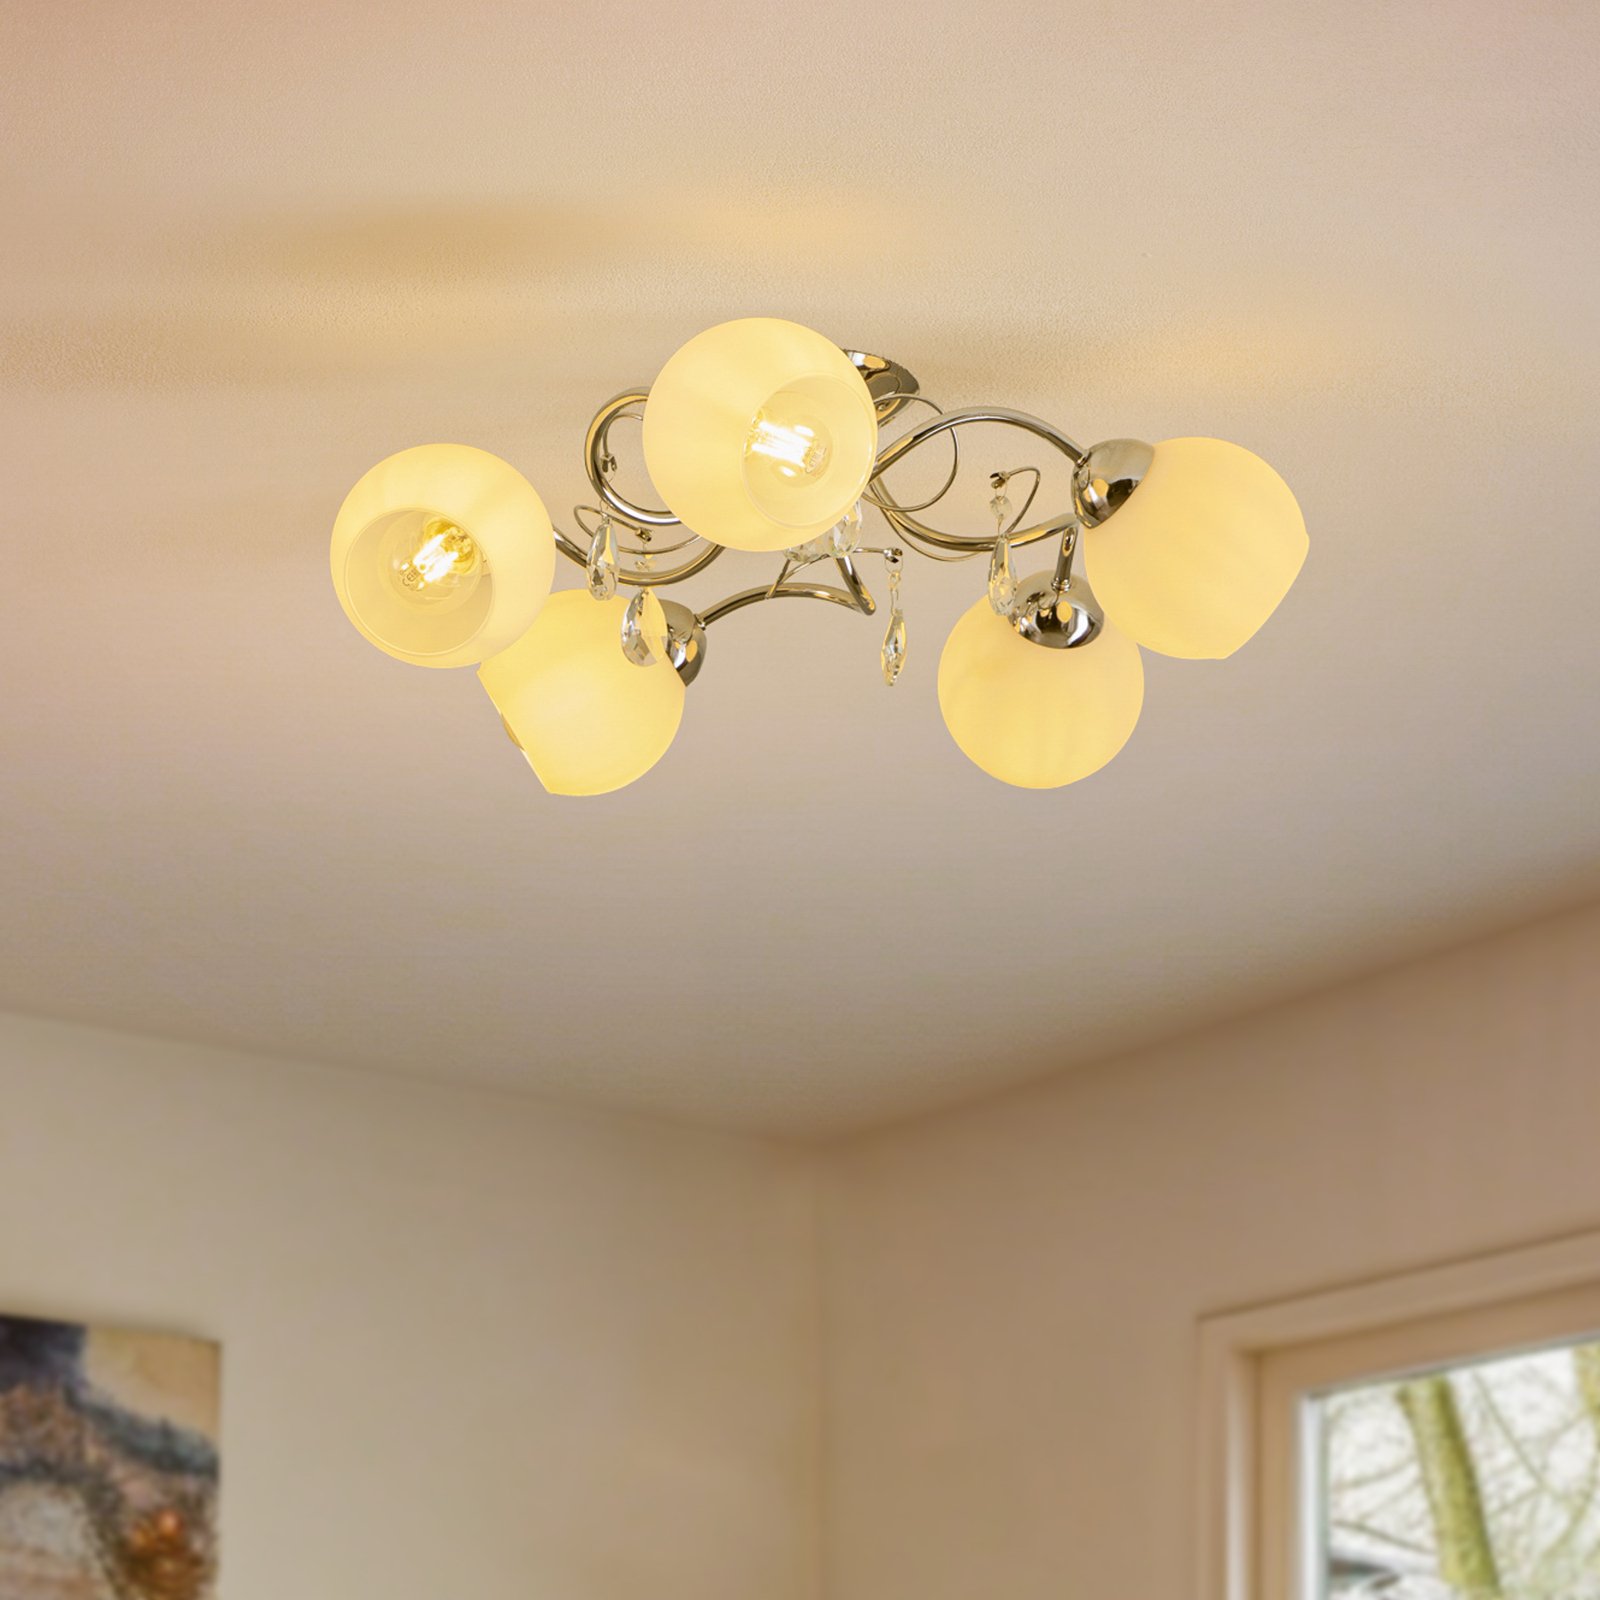 Plafondlamp Livia Pro, chroom/wit, 5-lamps